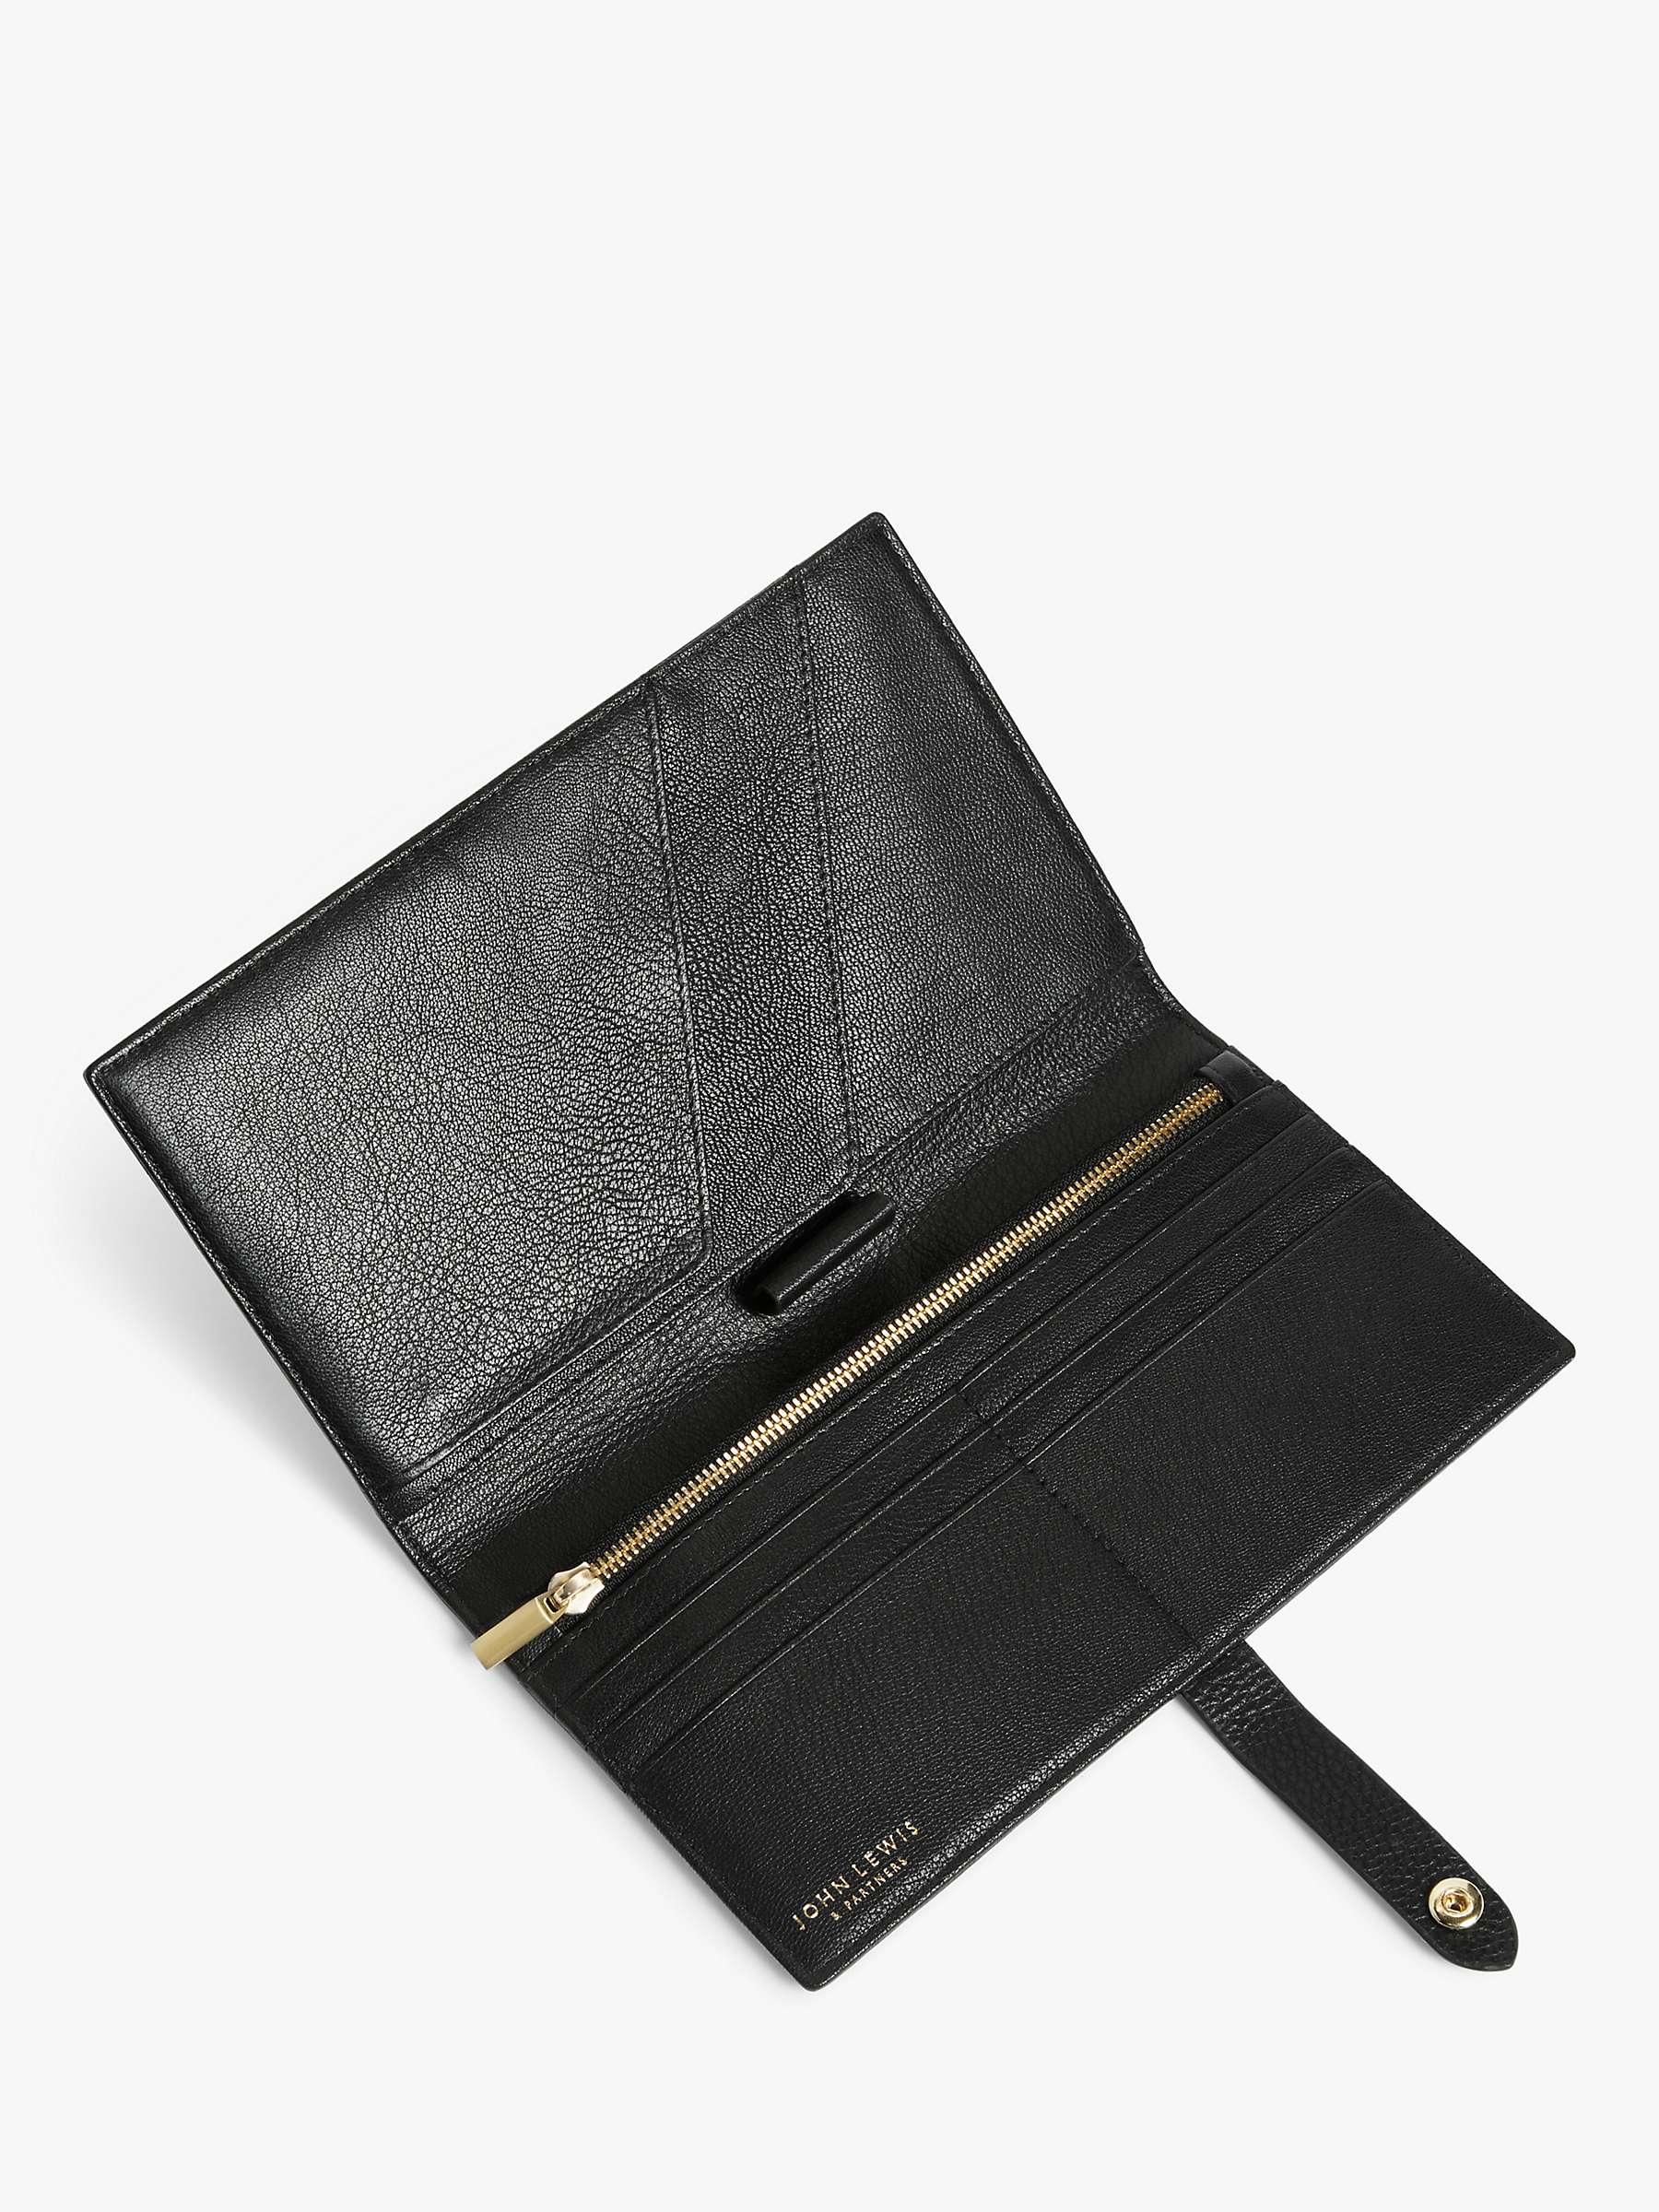 John Lewis & Partners Leather Travel Wallet, Black at John Lewis & Partners